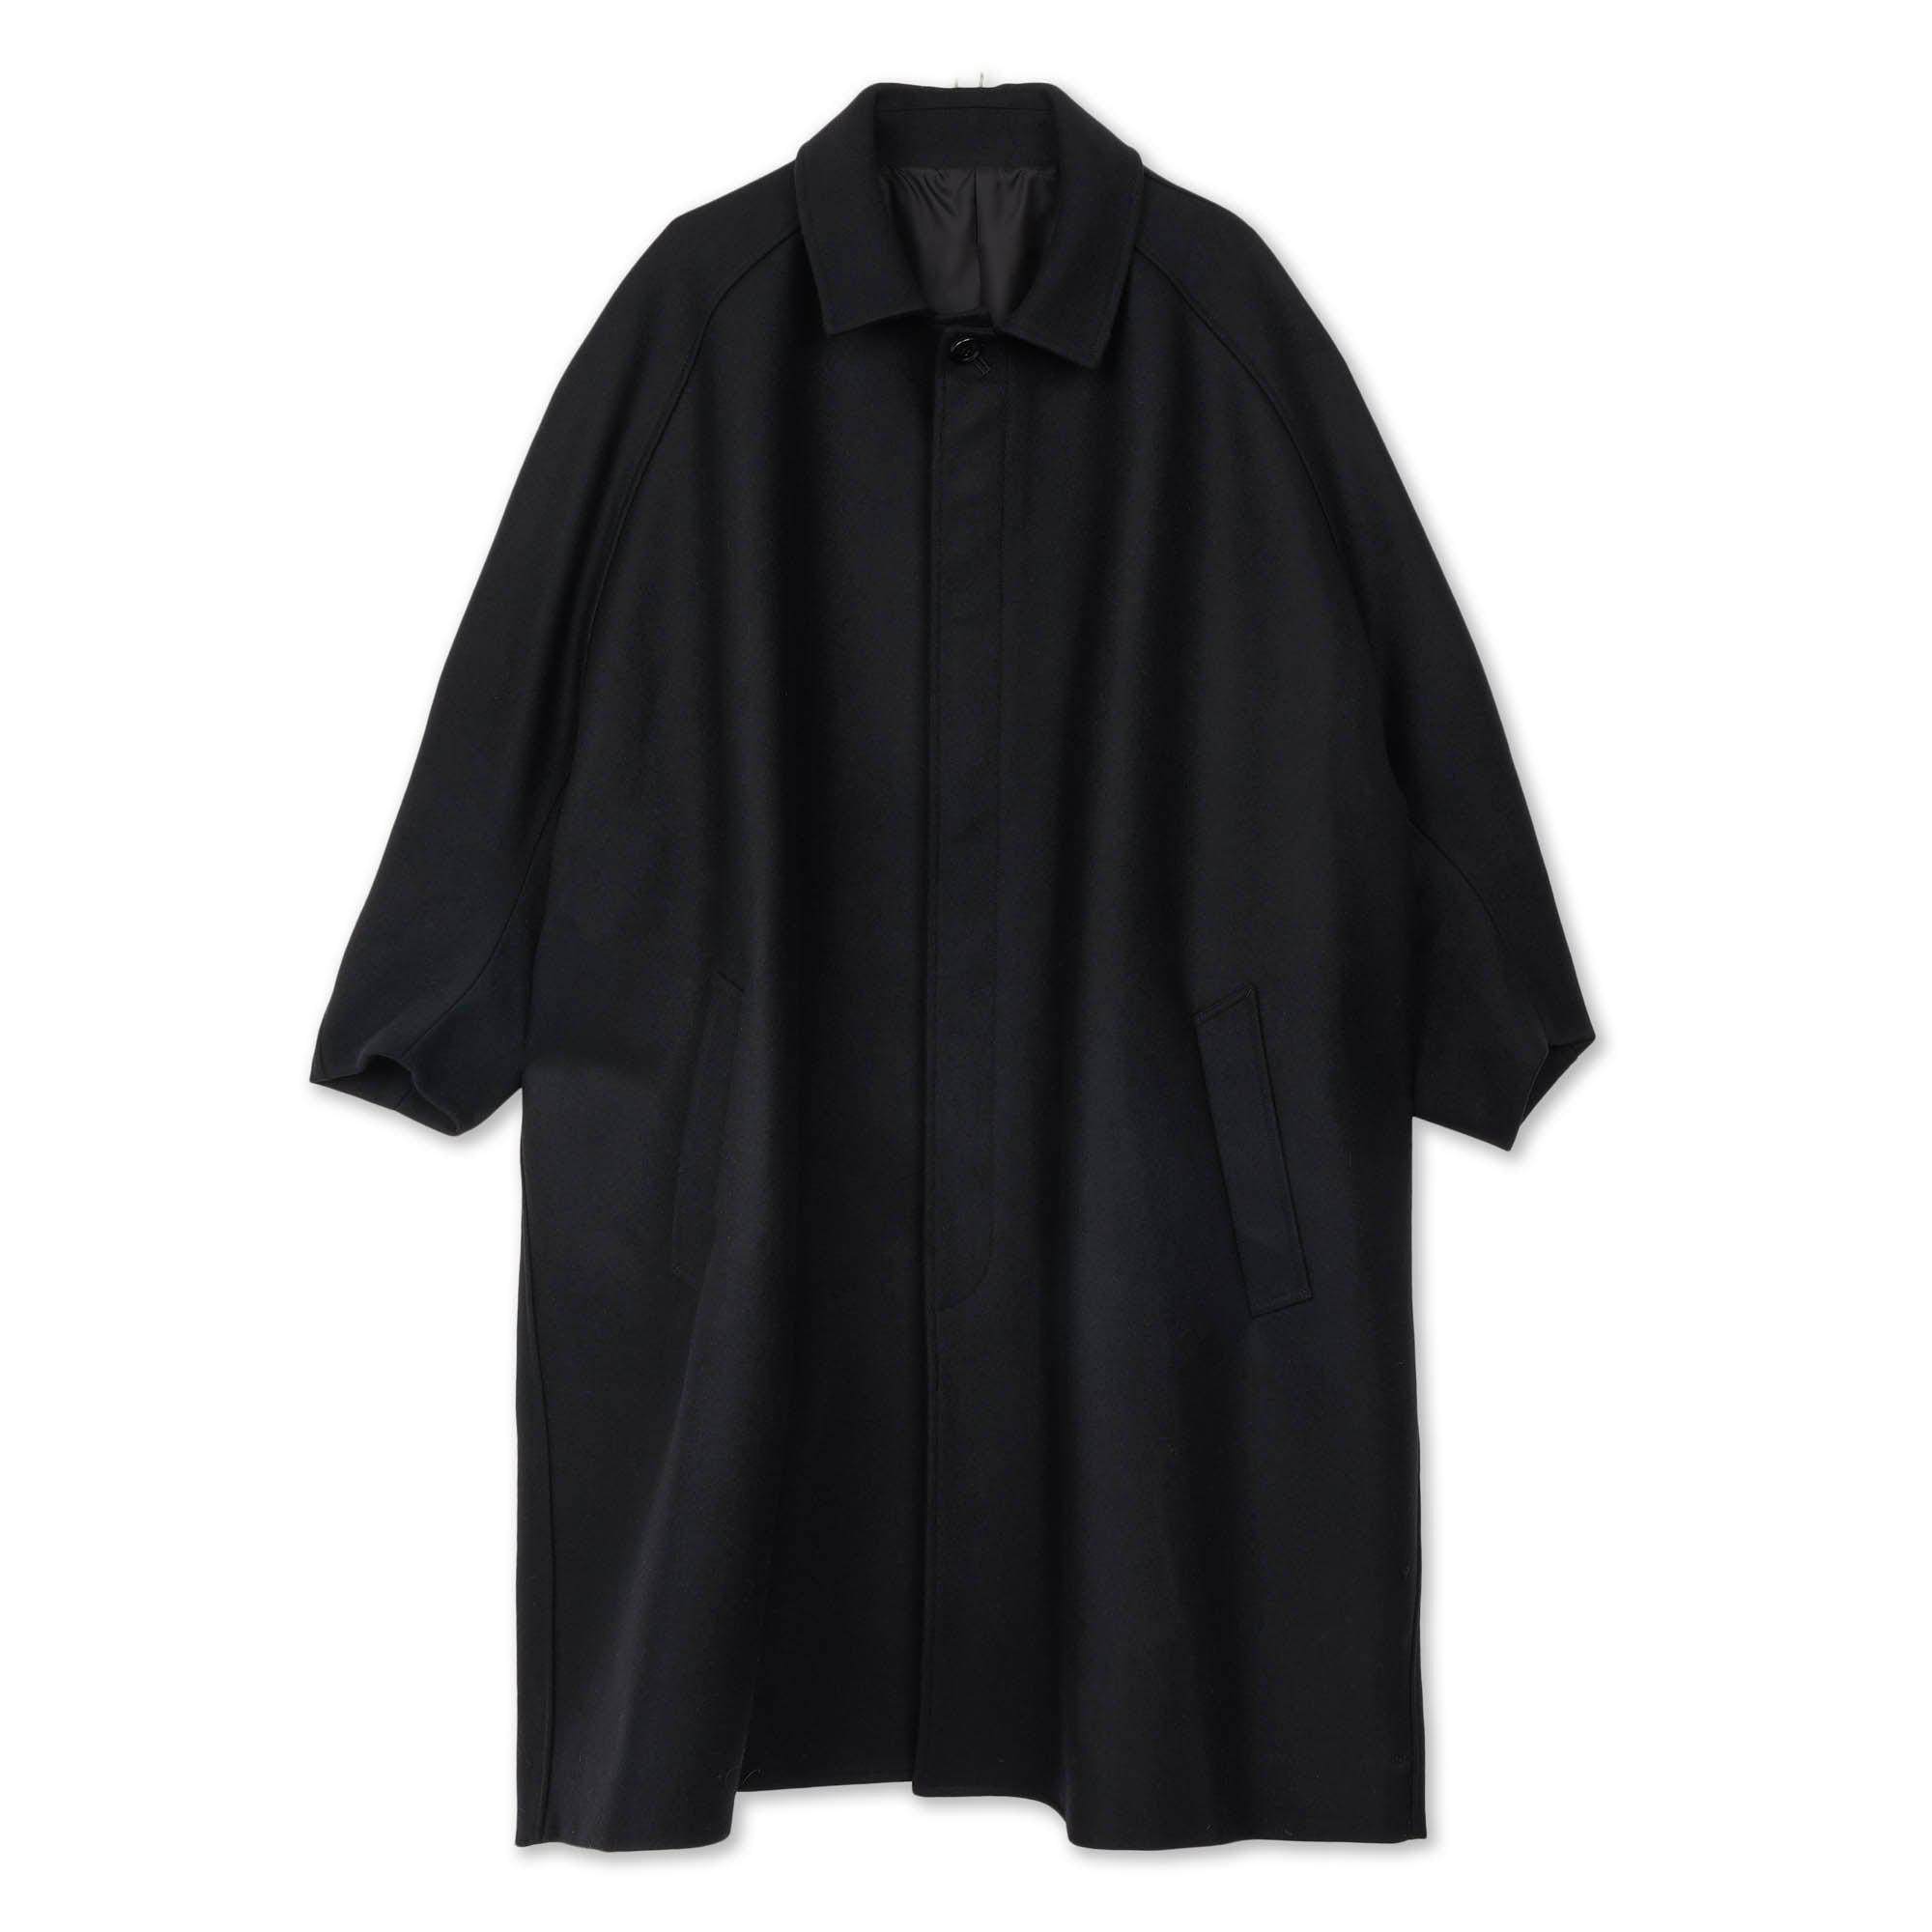 Nemeth Coat 236 (Black) by CHRISTOPHER NEMETH